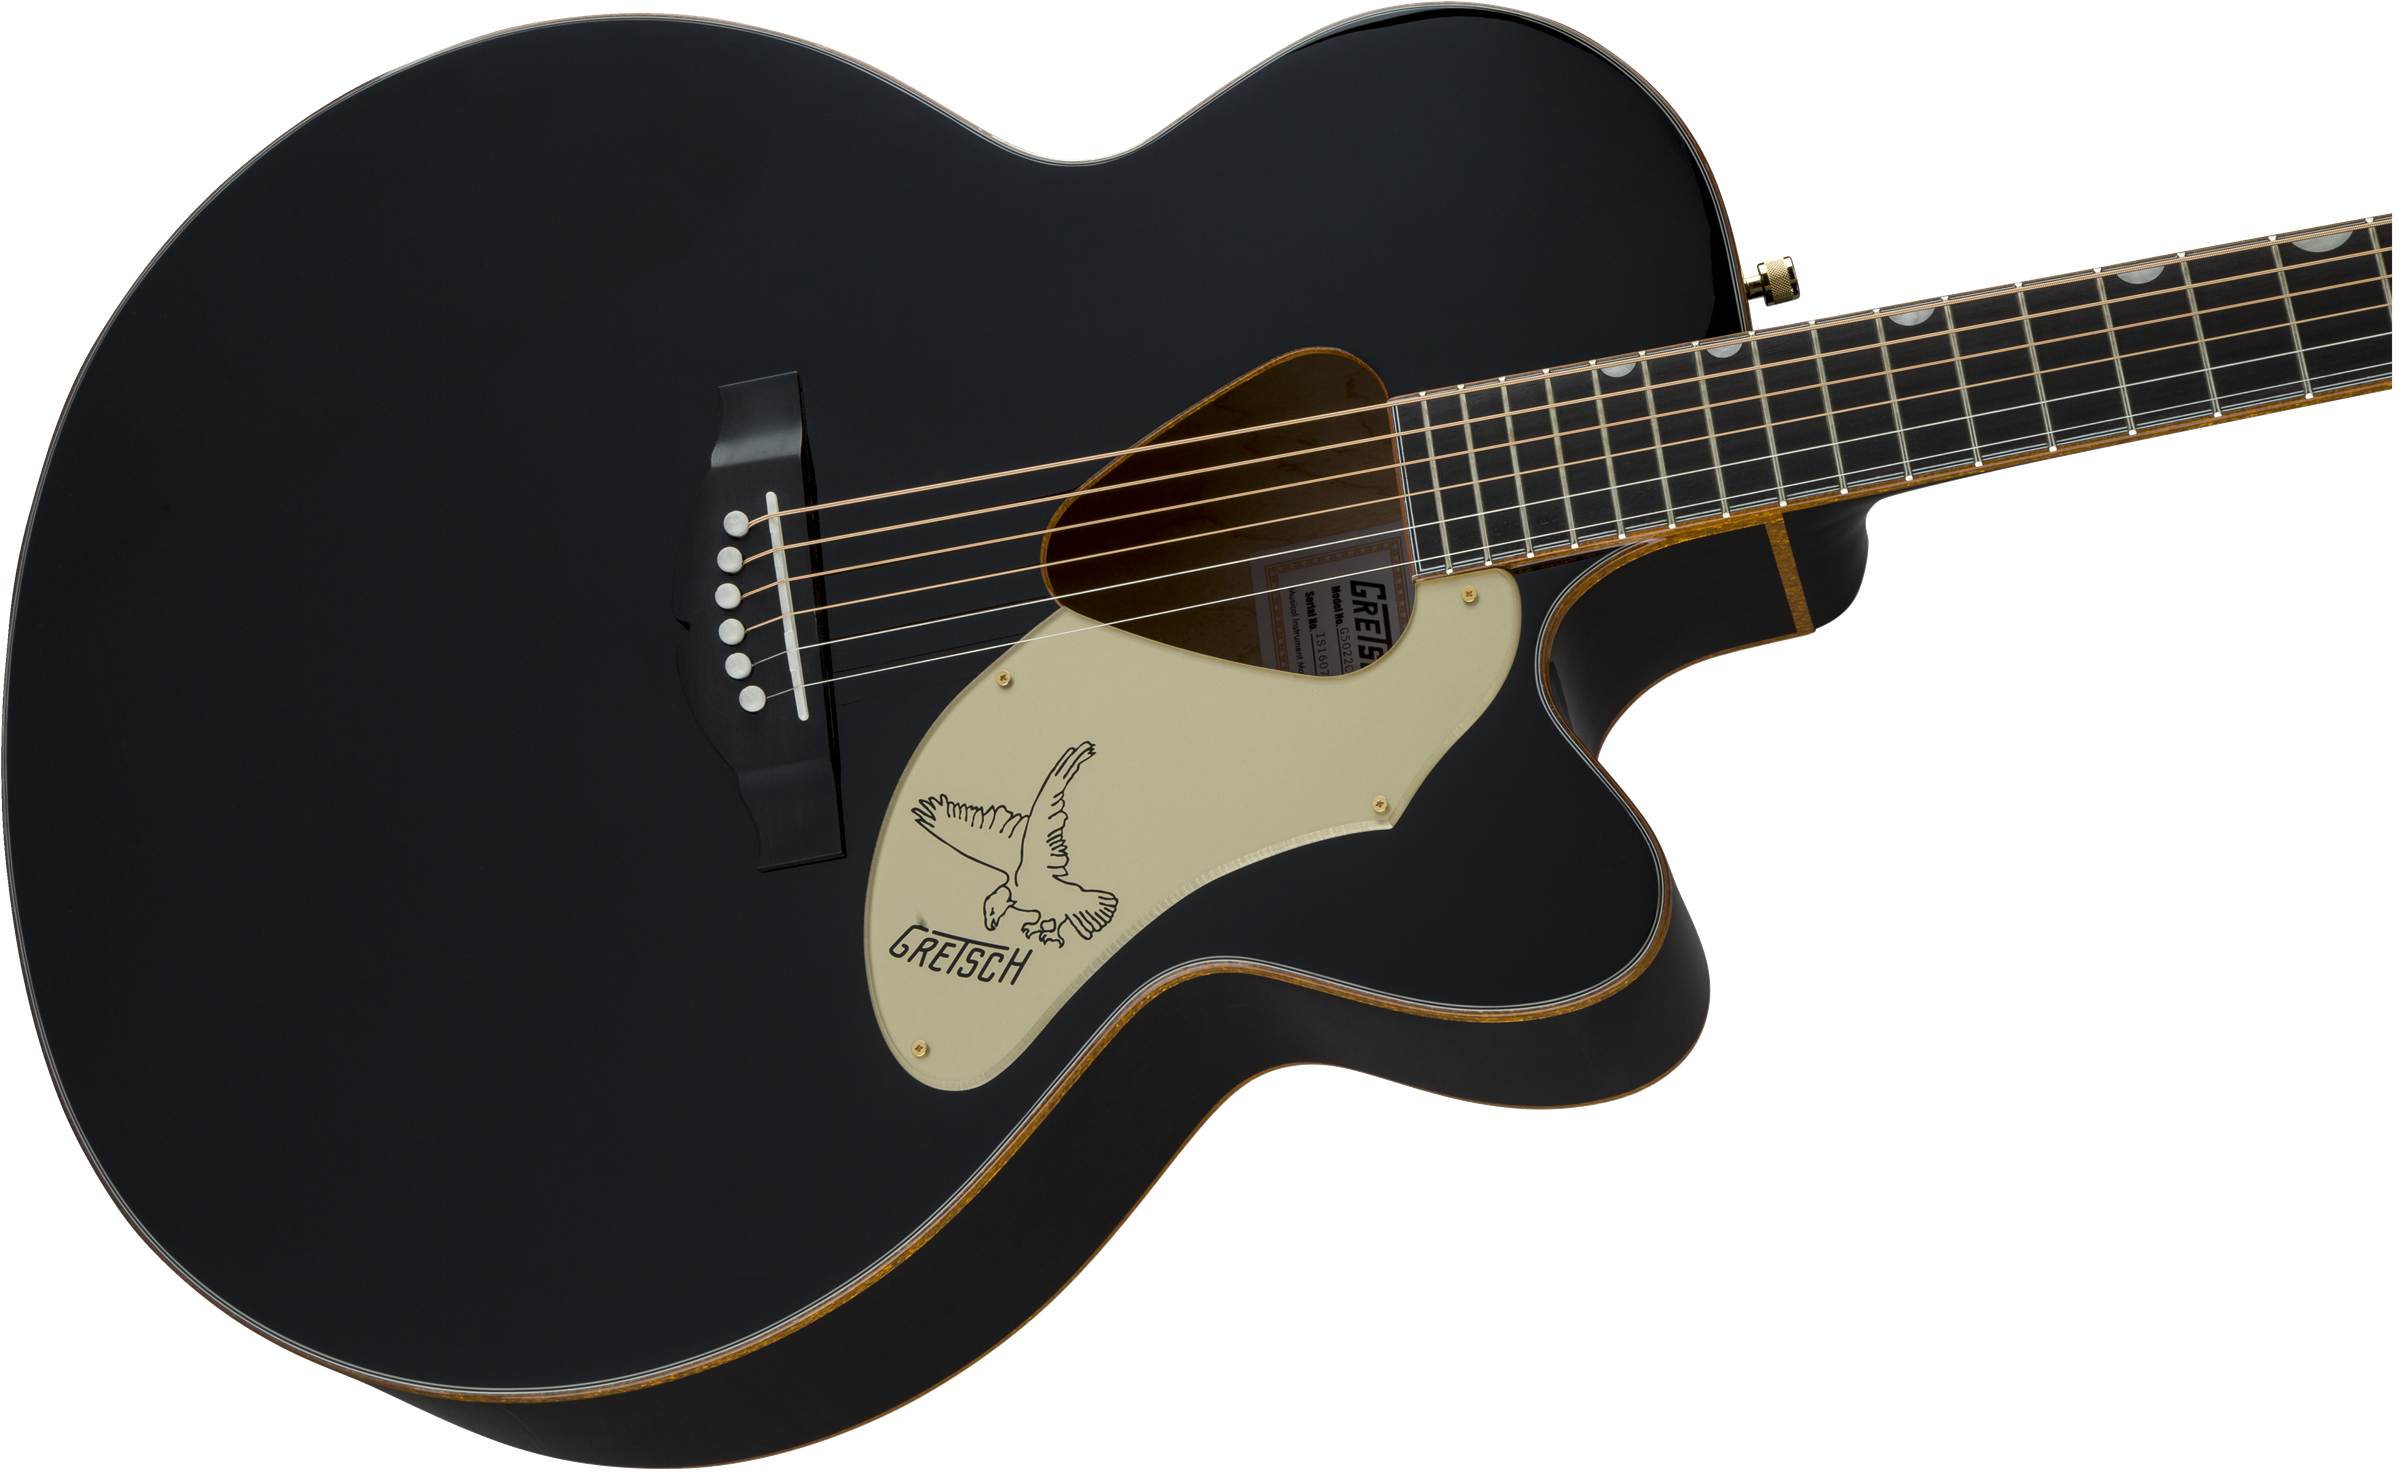 Gretsch G5022cbfe Rancher Falcon Jumbo Cw Epicea Erable Rw - Black - Elektroakustische Gitarre - Variation 3